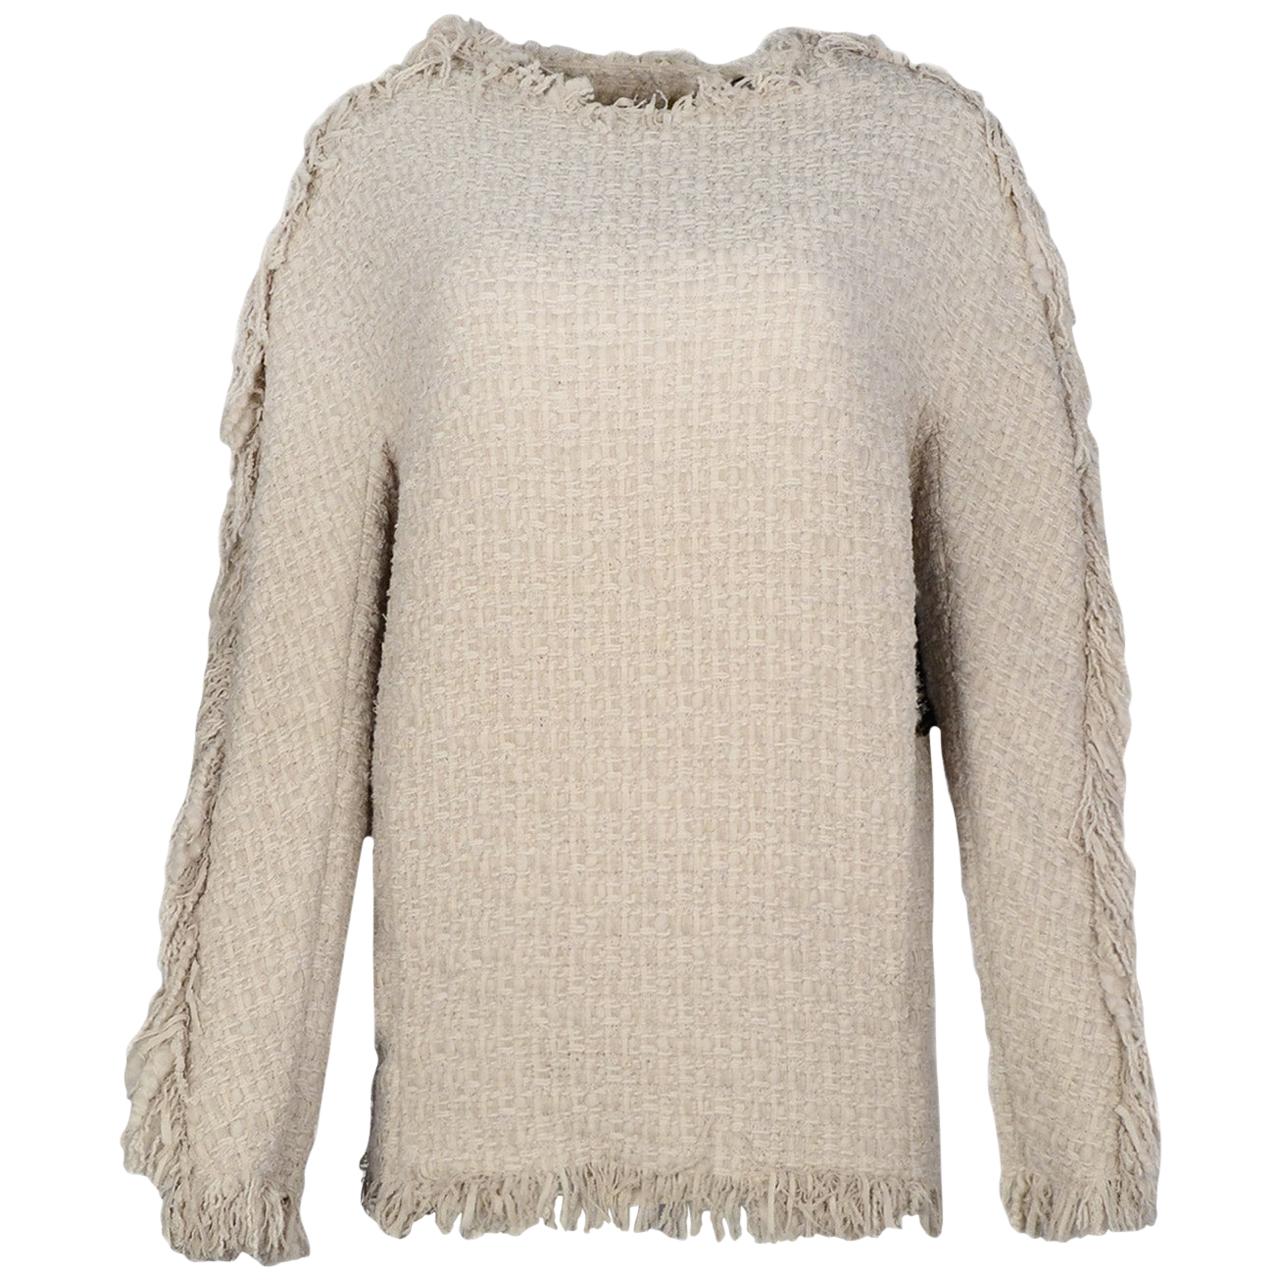 Lanvin NWT Beige Tweed Sweater w/ Fringe Trim sz 40 rt $2, 000